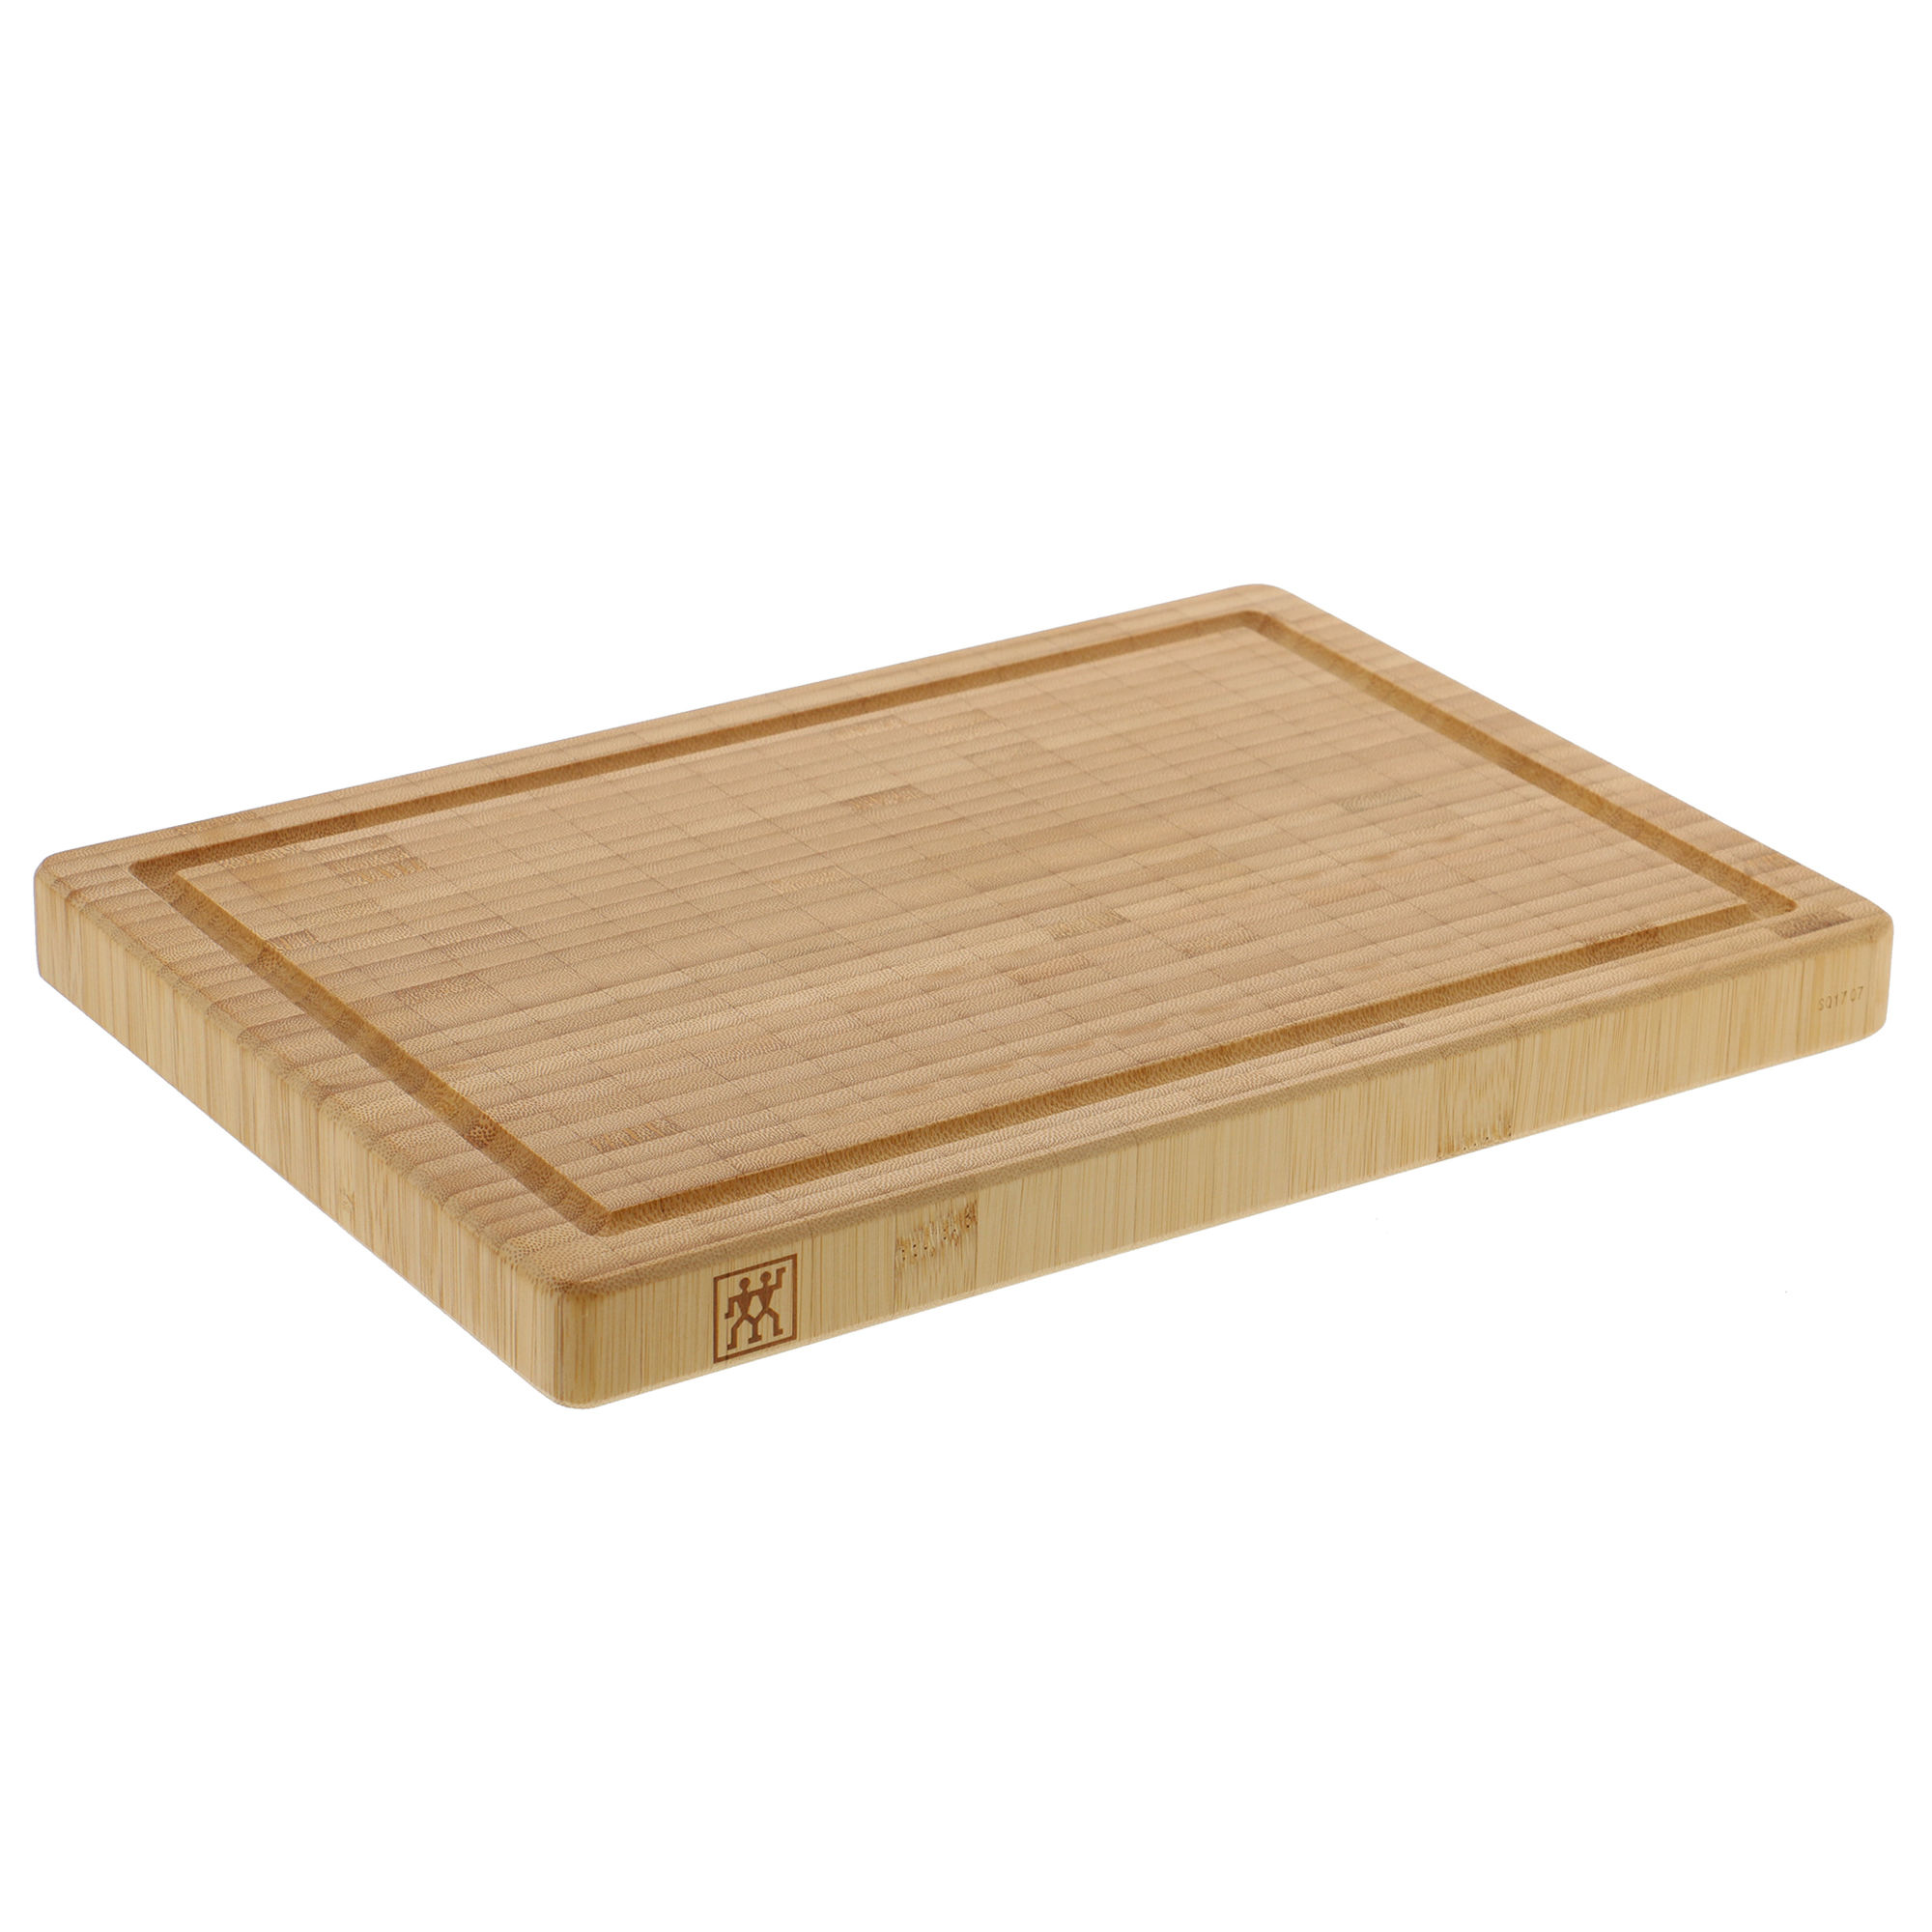 Zwilling cutting board walnut wood - 35x25 cm - ZW35123-100